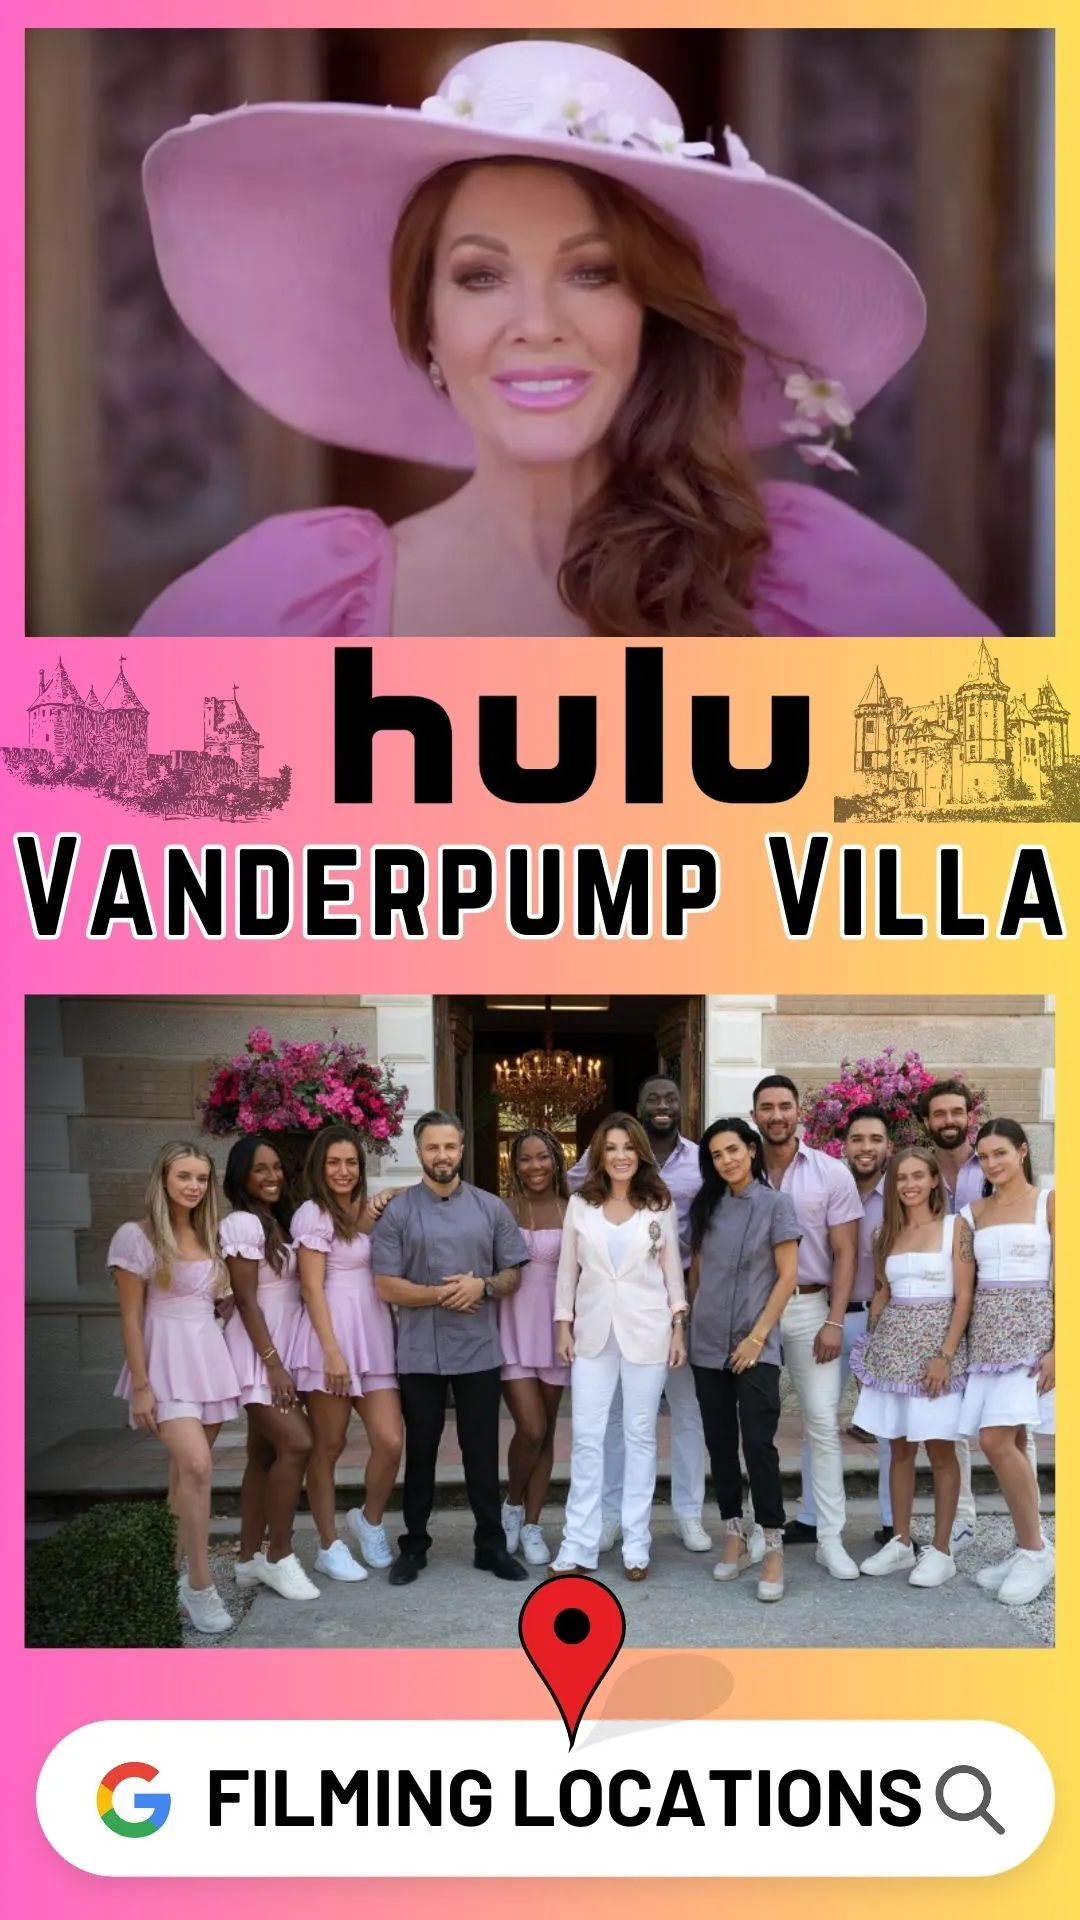 Vanderpump Villa Filming Locations